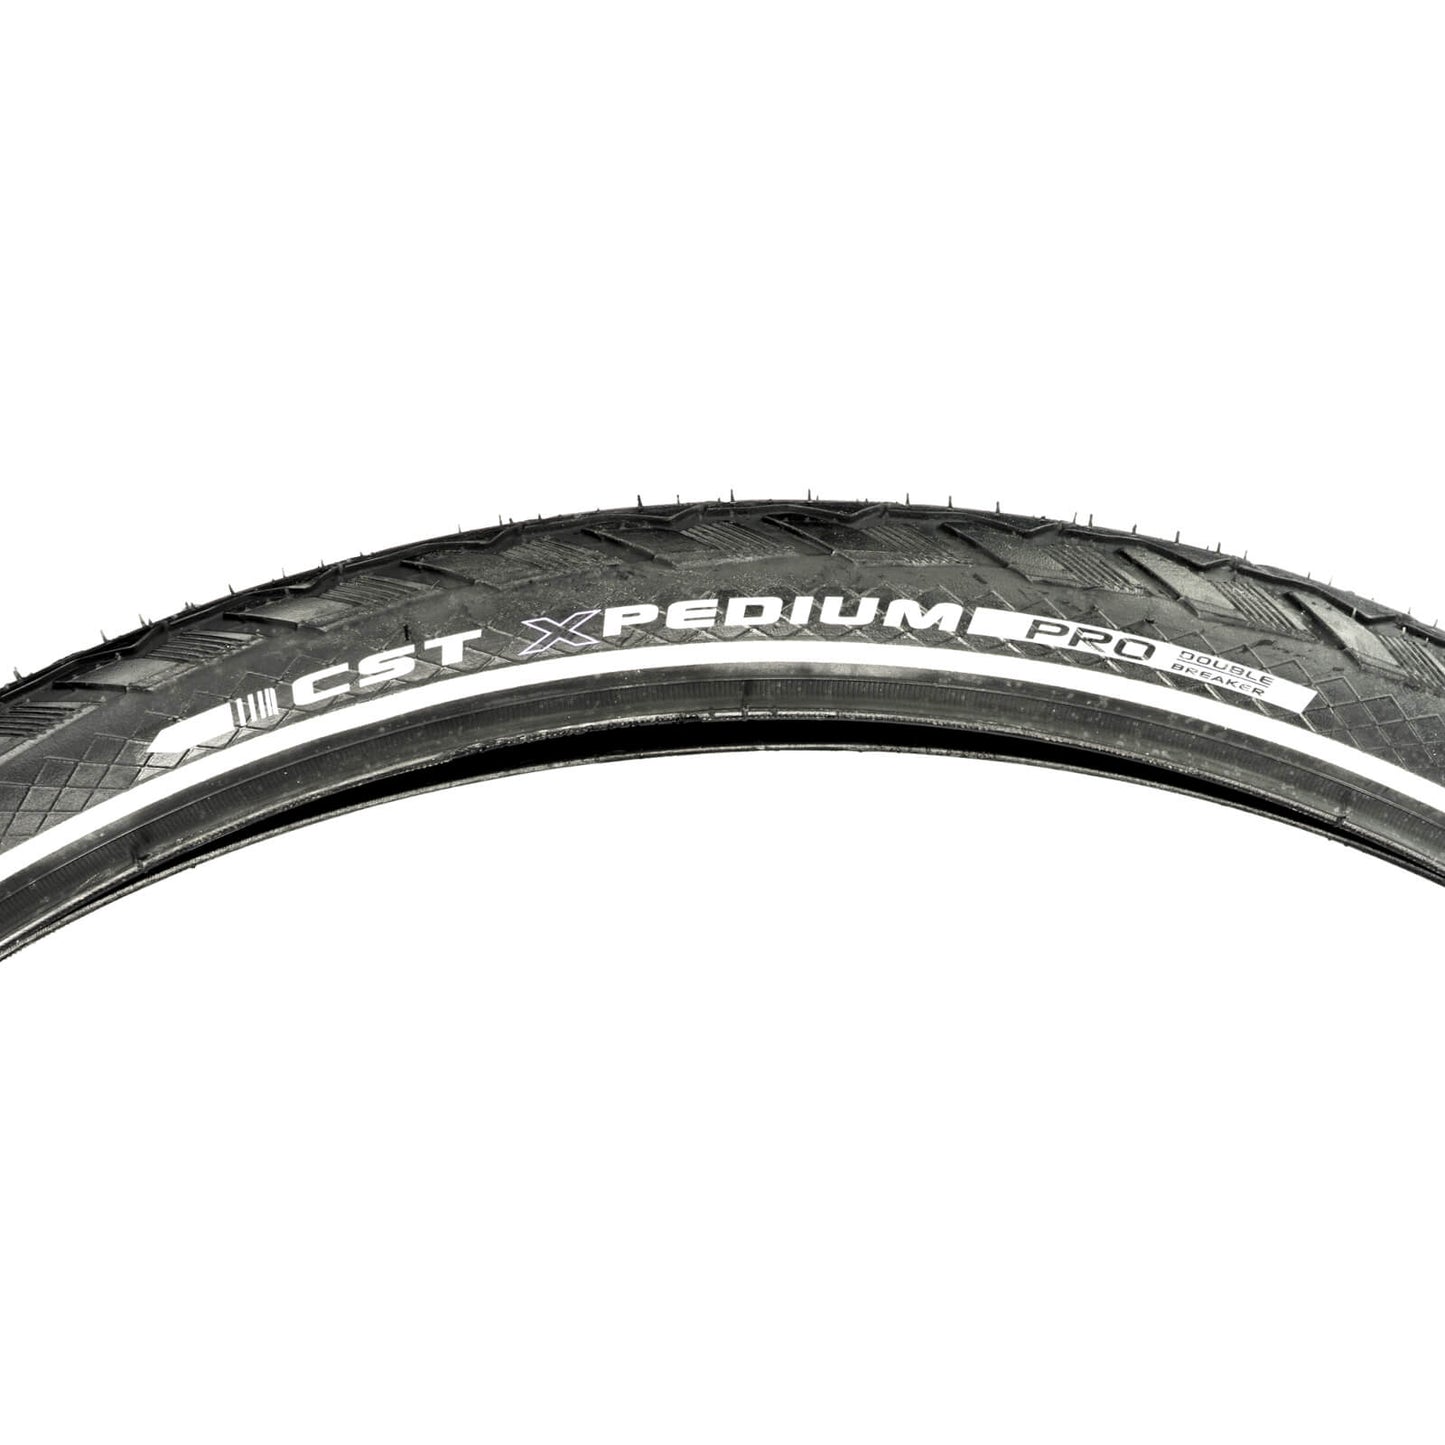 CST Xpedium Level 6 Single Compound Wire DB 700c Clincher Bike Tyre 700x45c